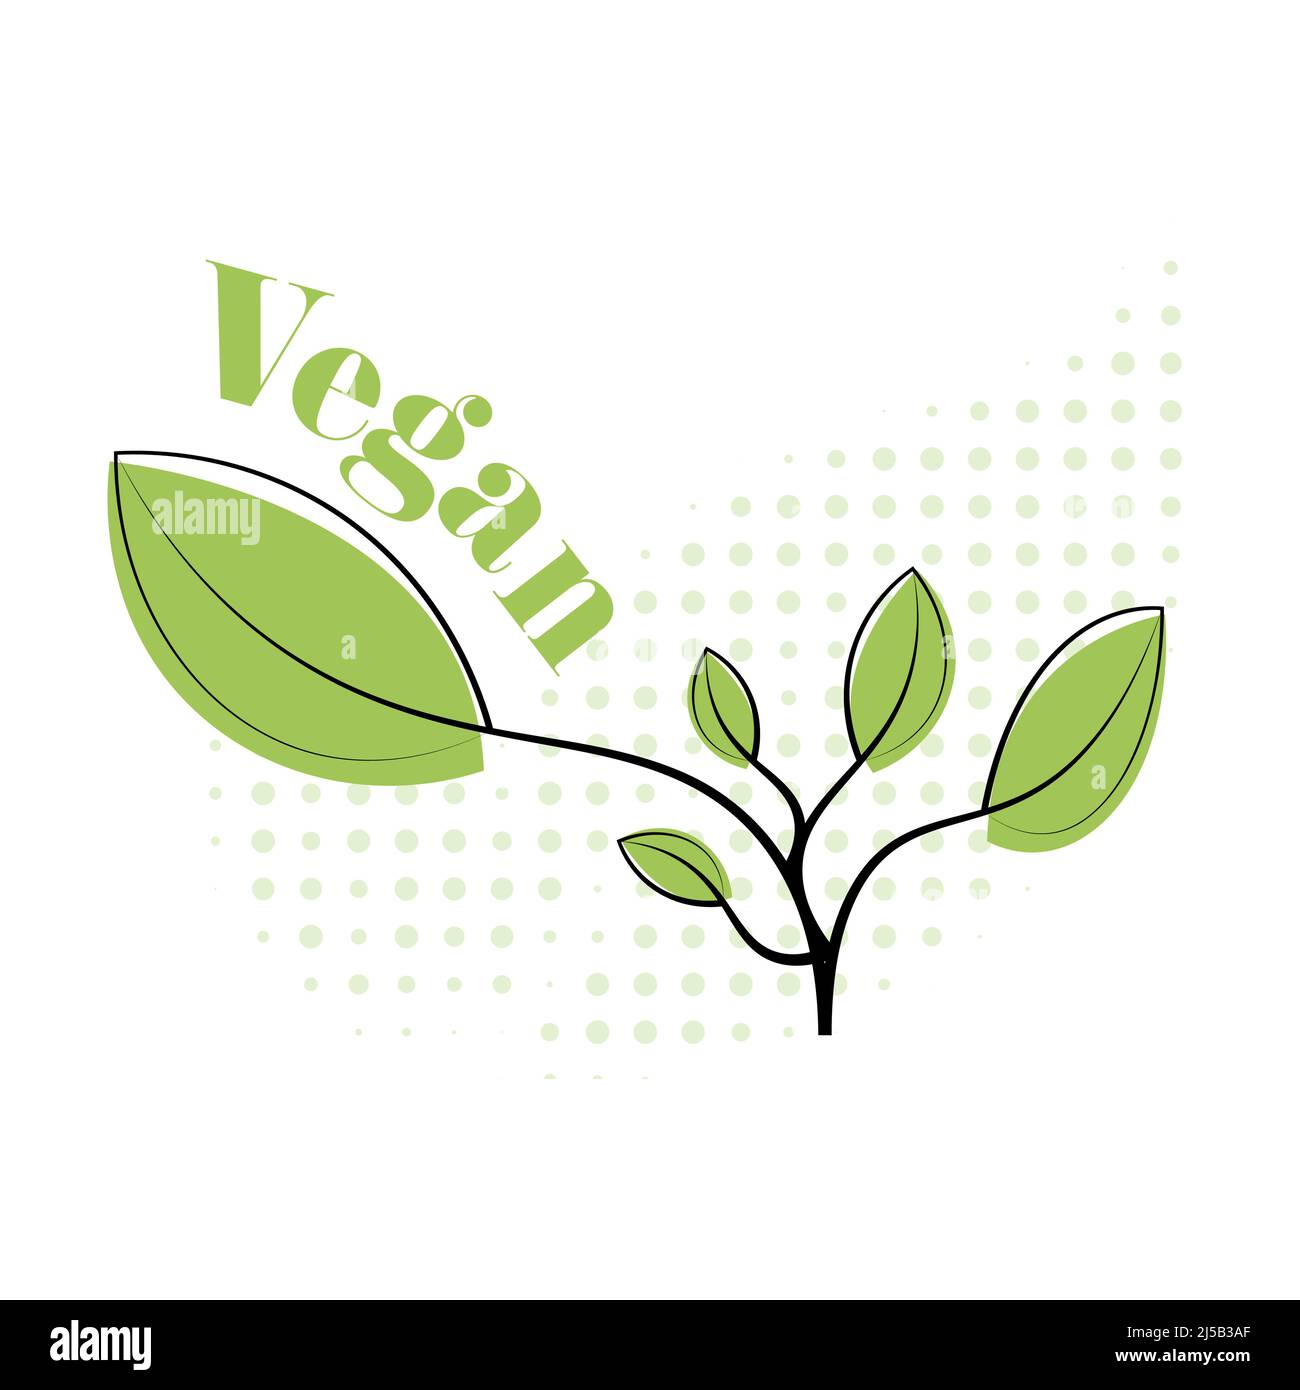 Vegan Food Vector Illustration - Plant based lifestyle Stock Vector